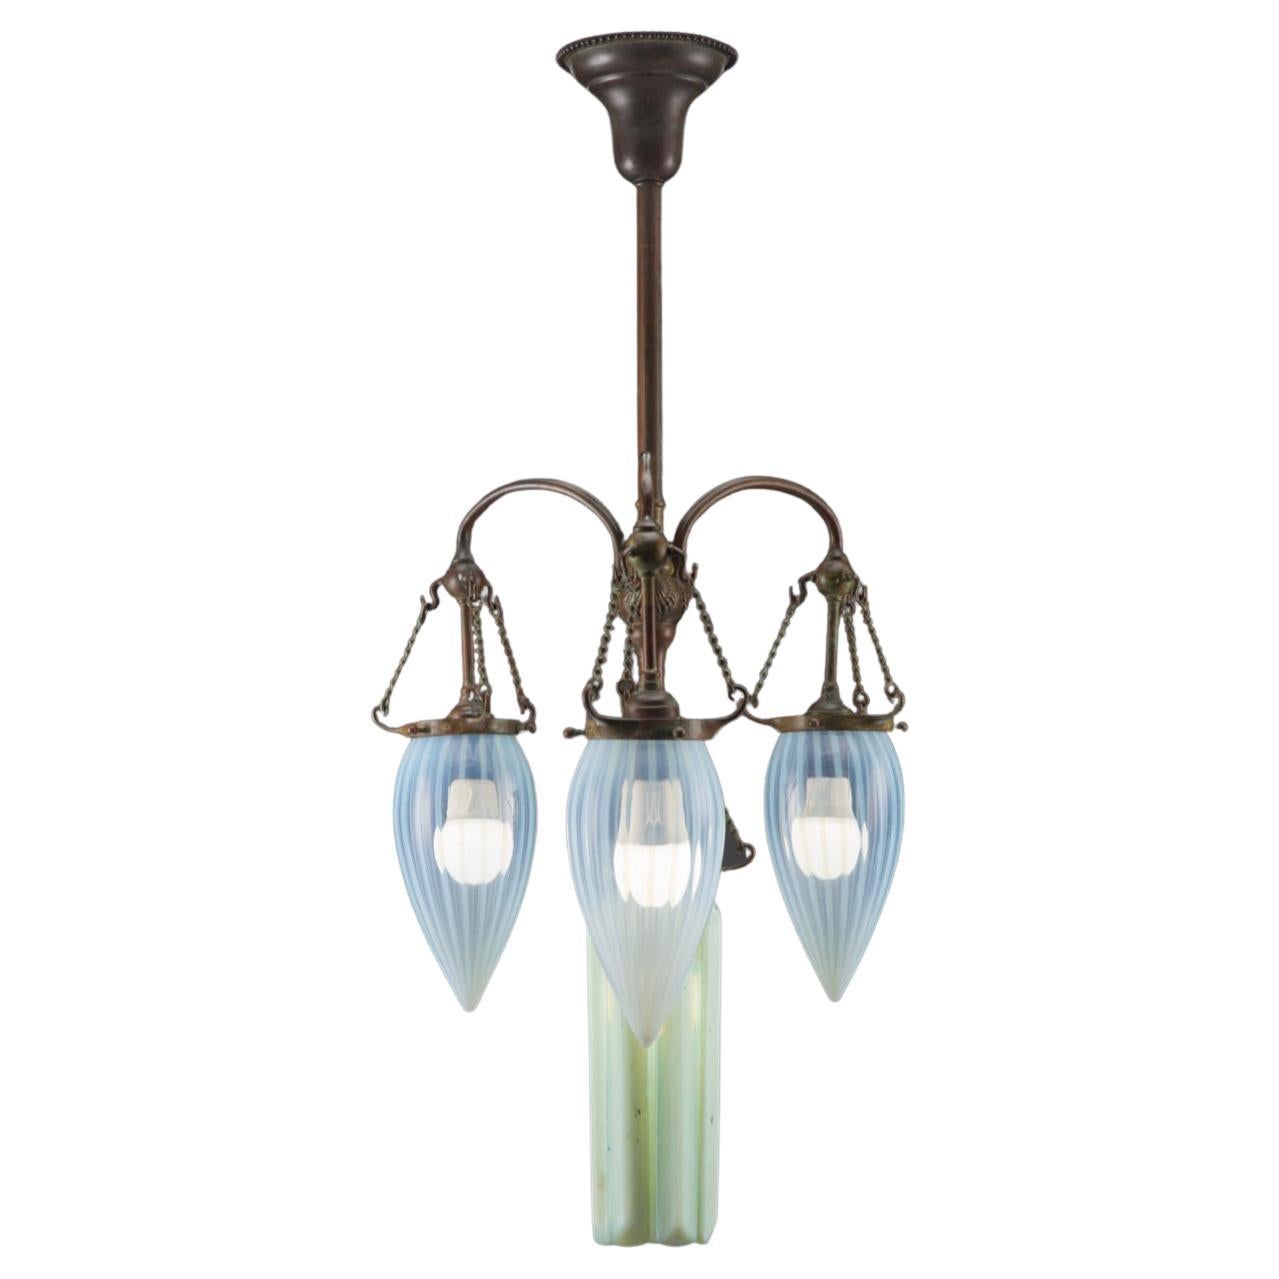 Tiffany Studios Moorish Chandelier Lamp